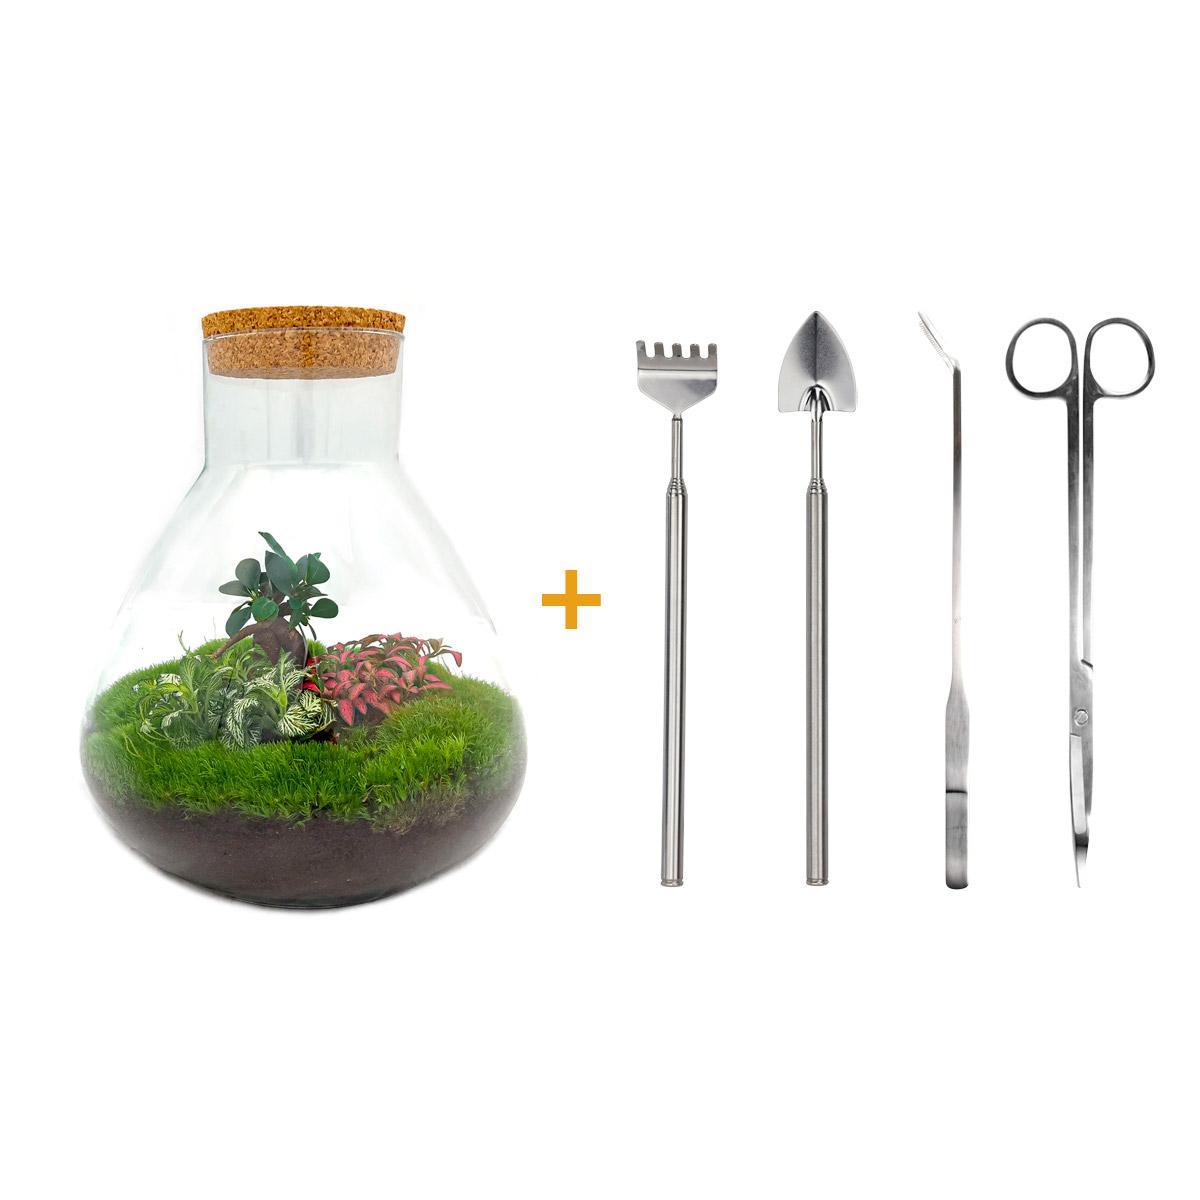 DIY terrarium - Sam XL Bonsai - ↑ 35 cm + Rake + Shovel + Tweezer